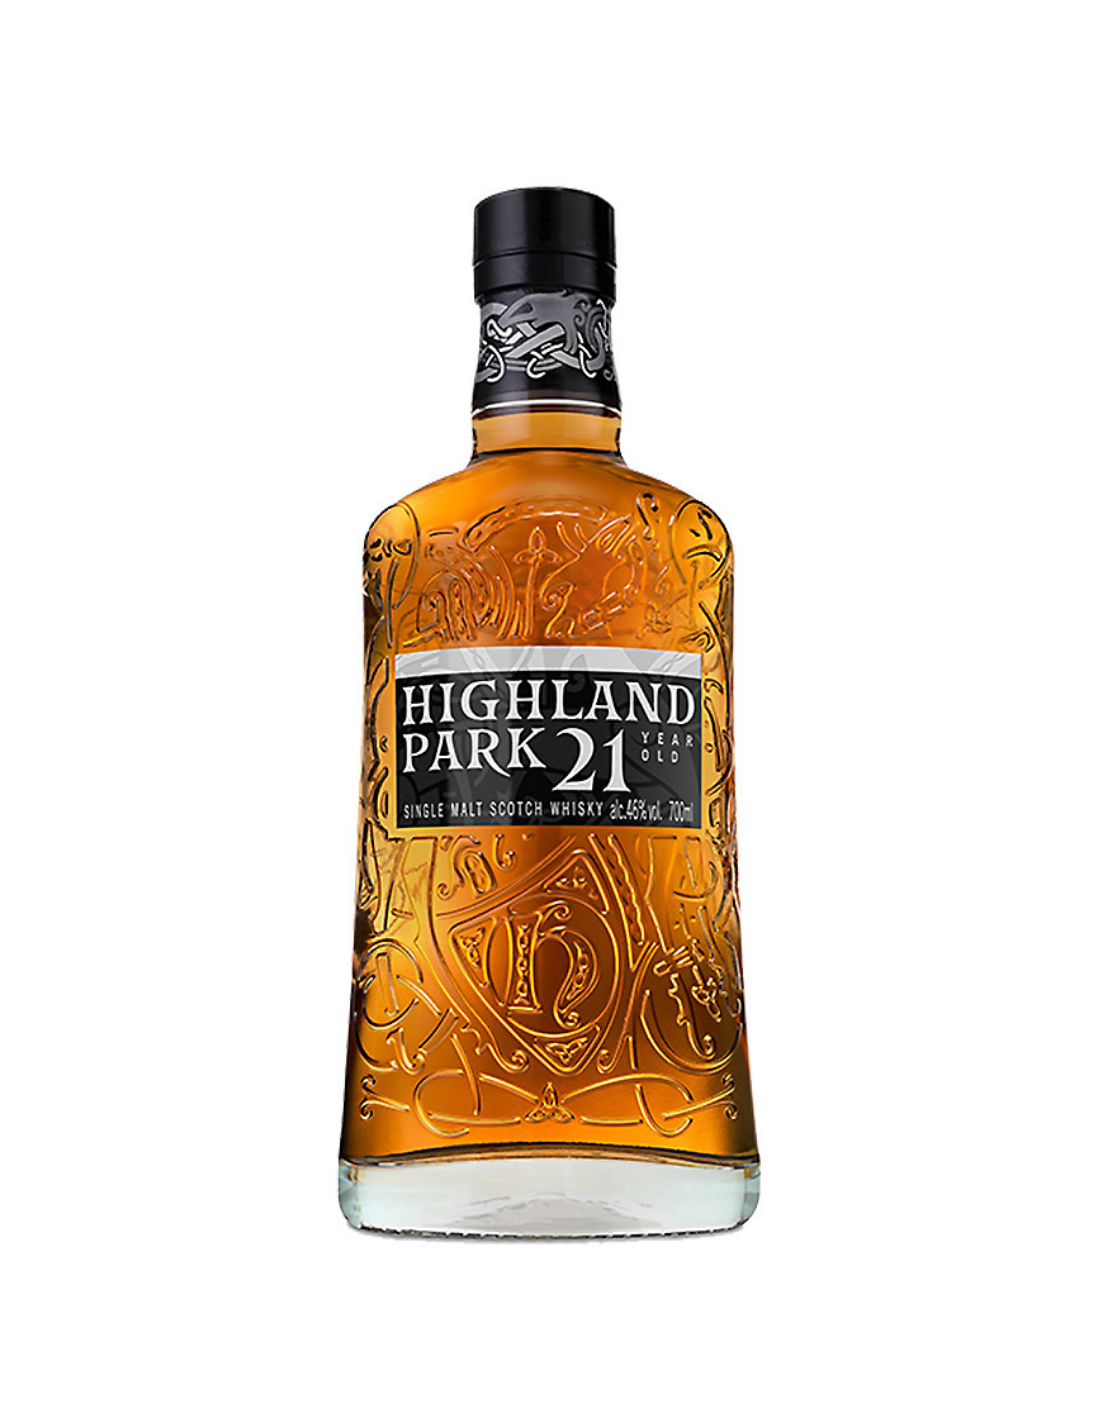 Whisky Highland Park 21 Year Old Single Malt Scotch, 0.7L, 46% alc., Marea Britanie alcooldiscount.ro